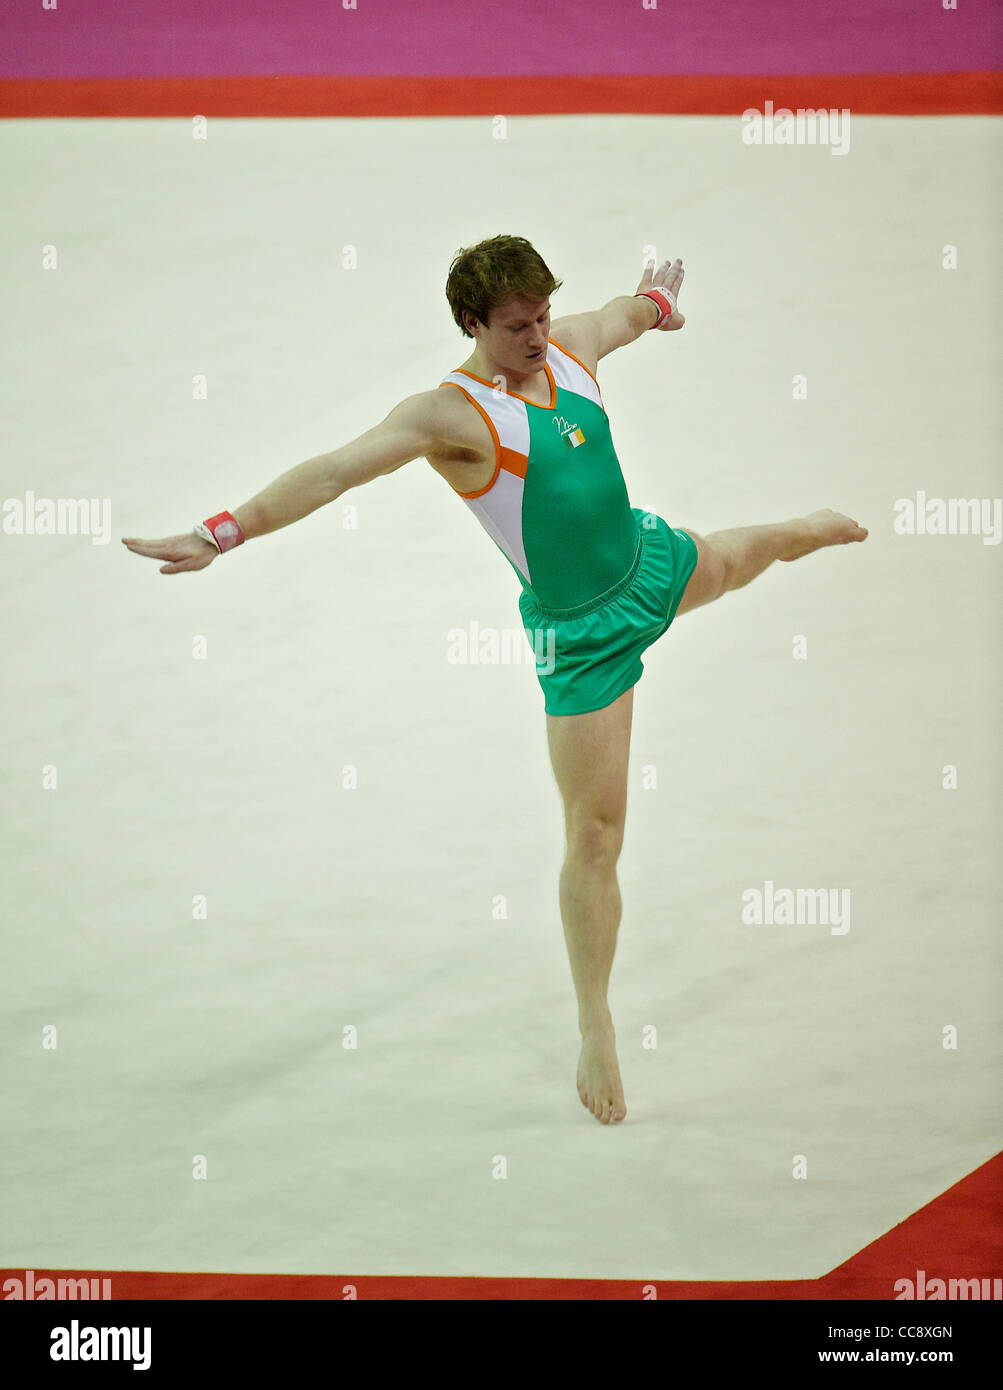 Kieran BEHAN (IRL), konkurriert in Bodenturnen, The London bereitet Visa International Gymnastics, Stockfoto